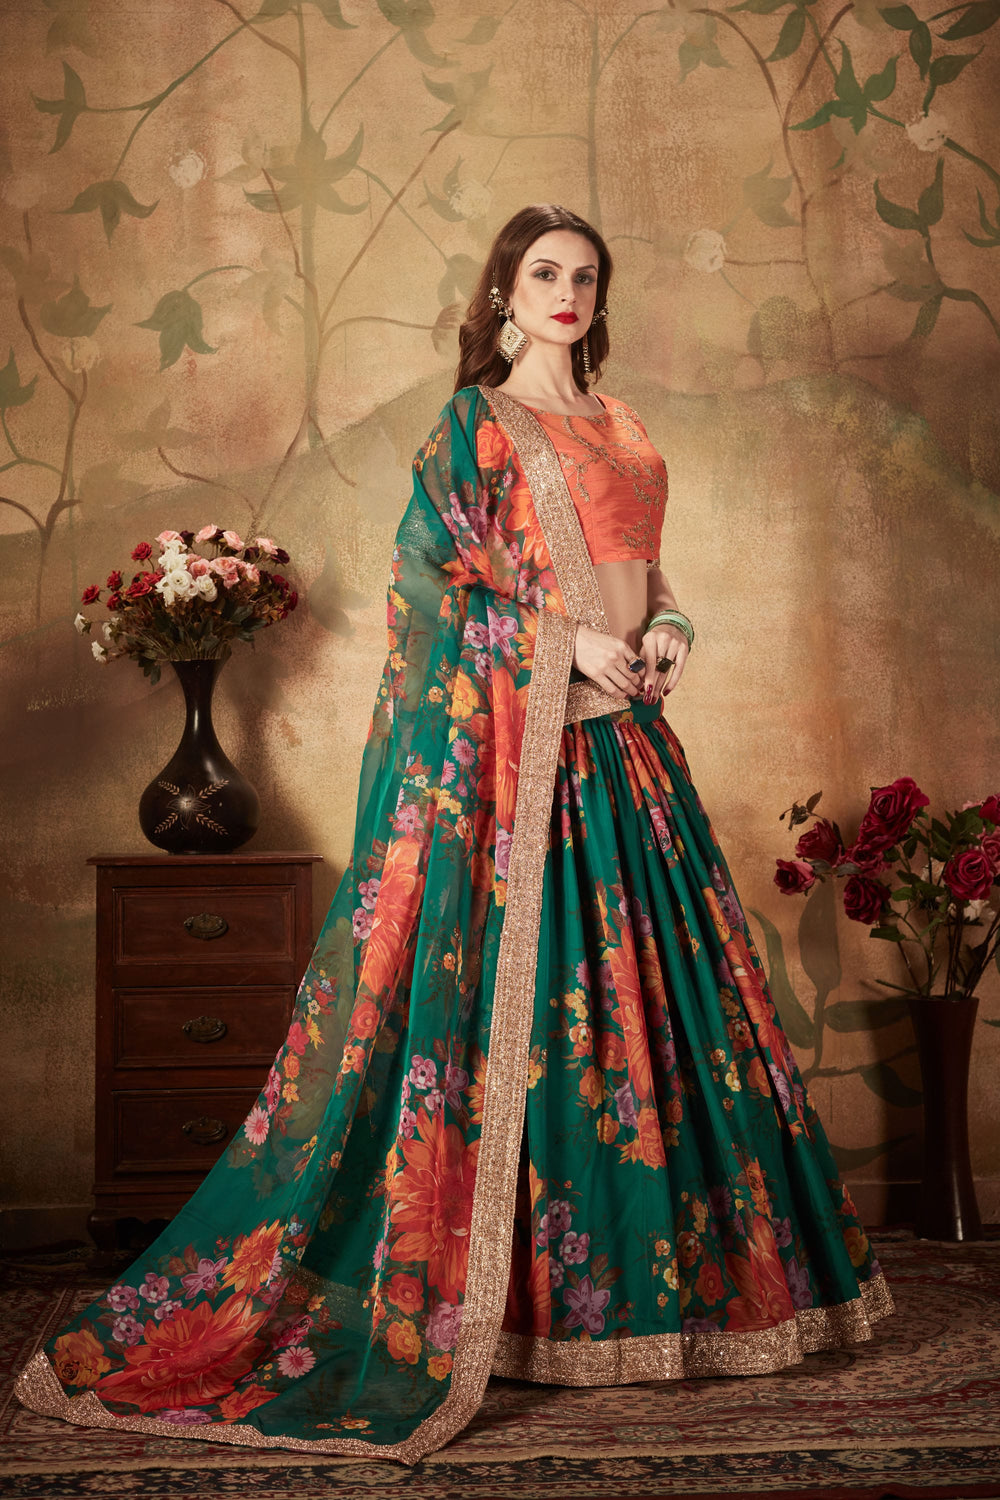 Elegant Green and Orange Digital Print Lehenga Choli with Exquisite Embroidery